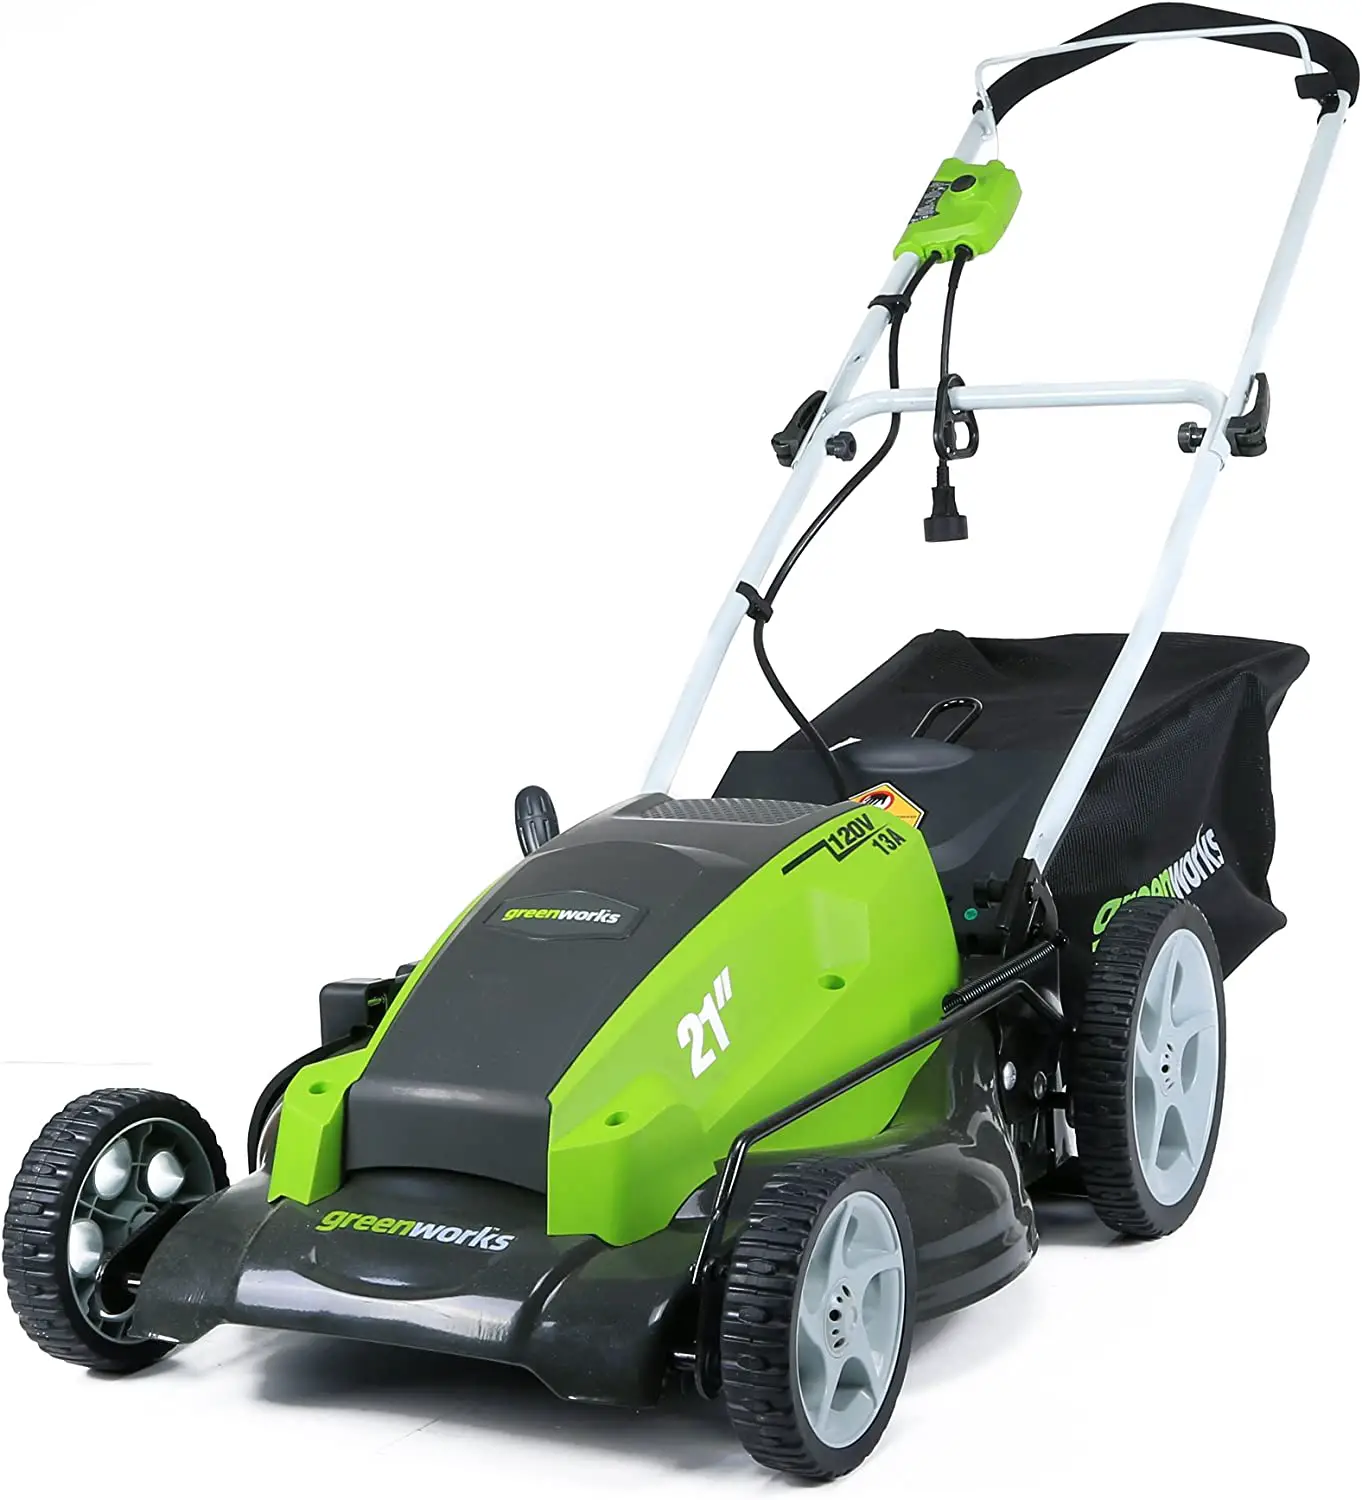 Best Greenworks Electric Lawn Mower Reviews 0f yearof20